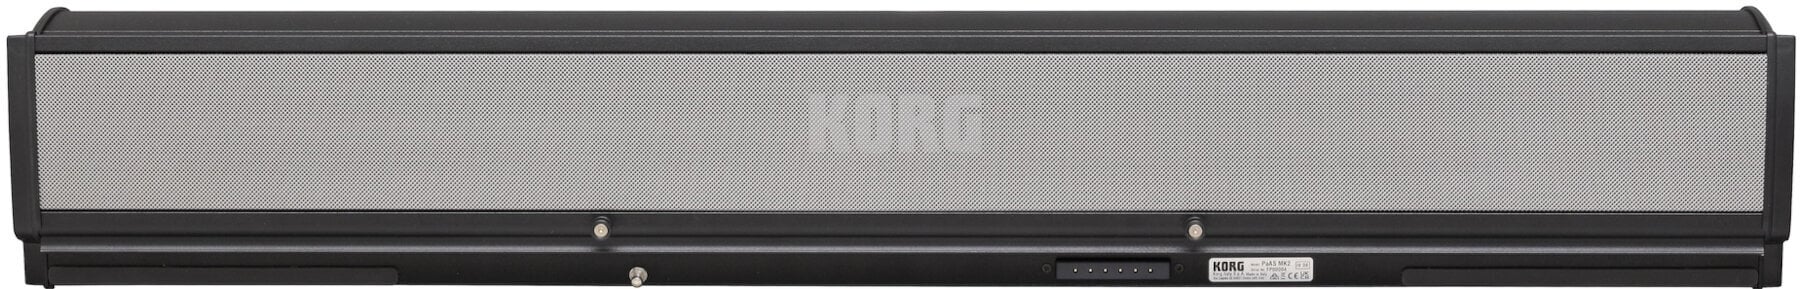 Keyboard-Verstärker Korg PaAS MK2